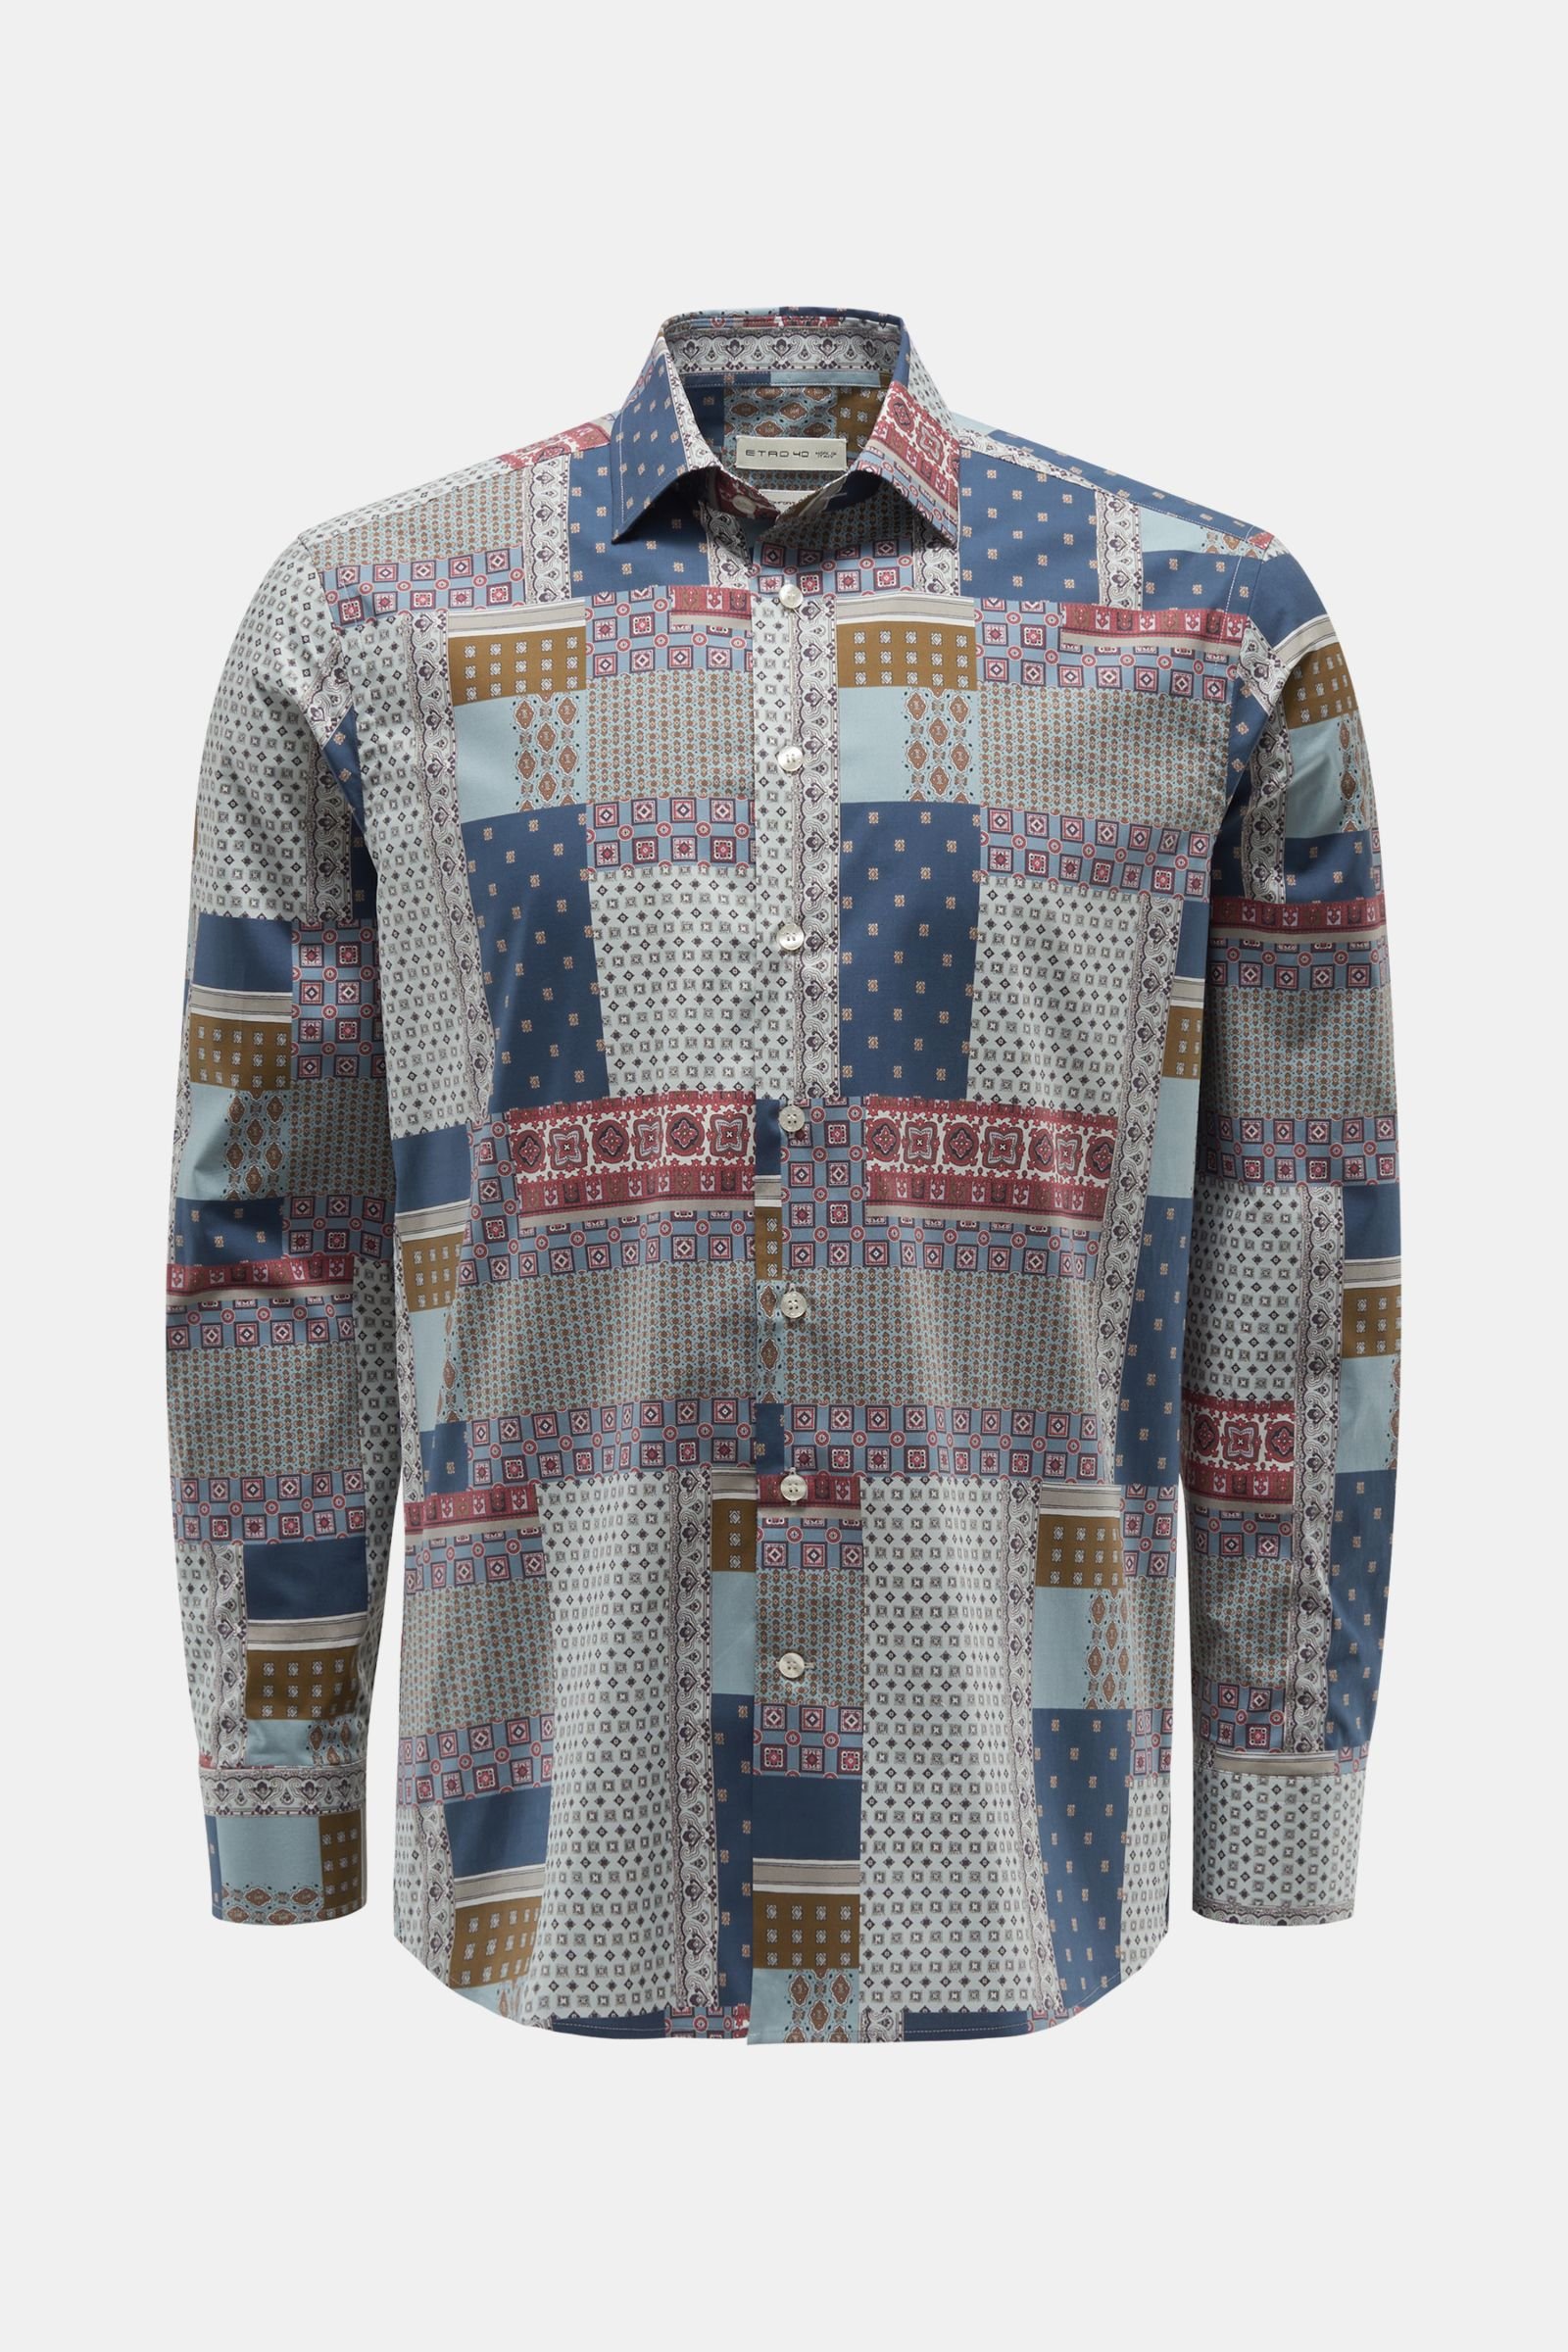 Casual shirt narrow collar grey-blue/pastel blue patterned